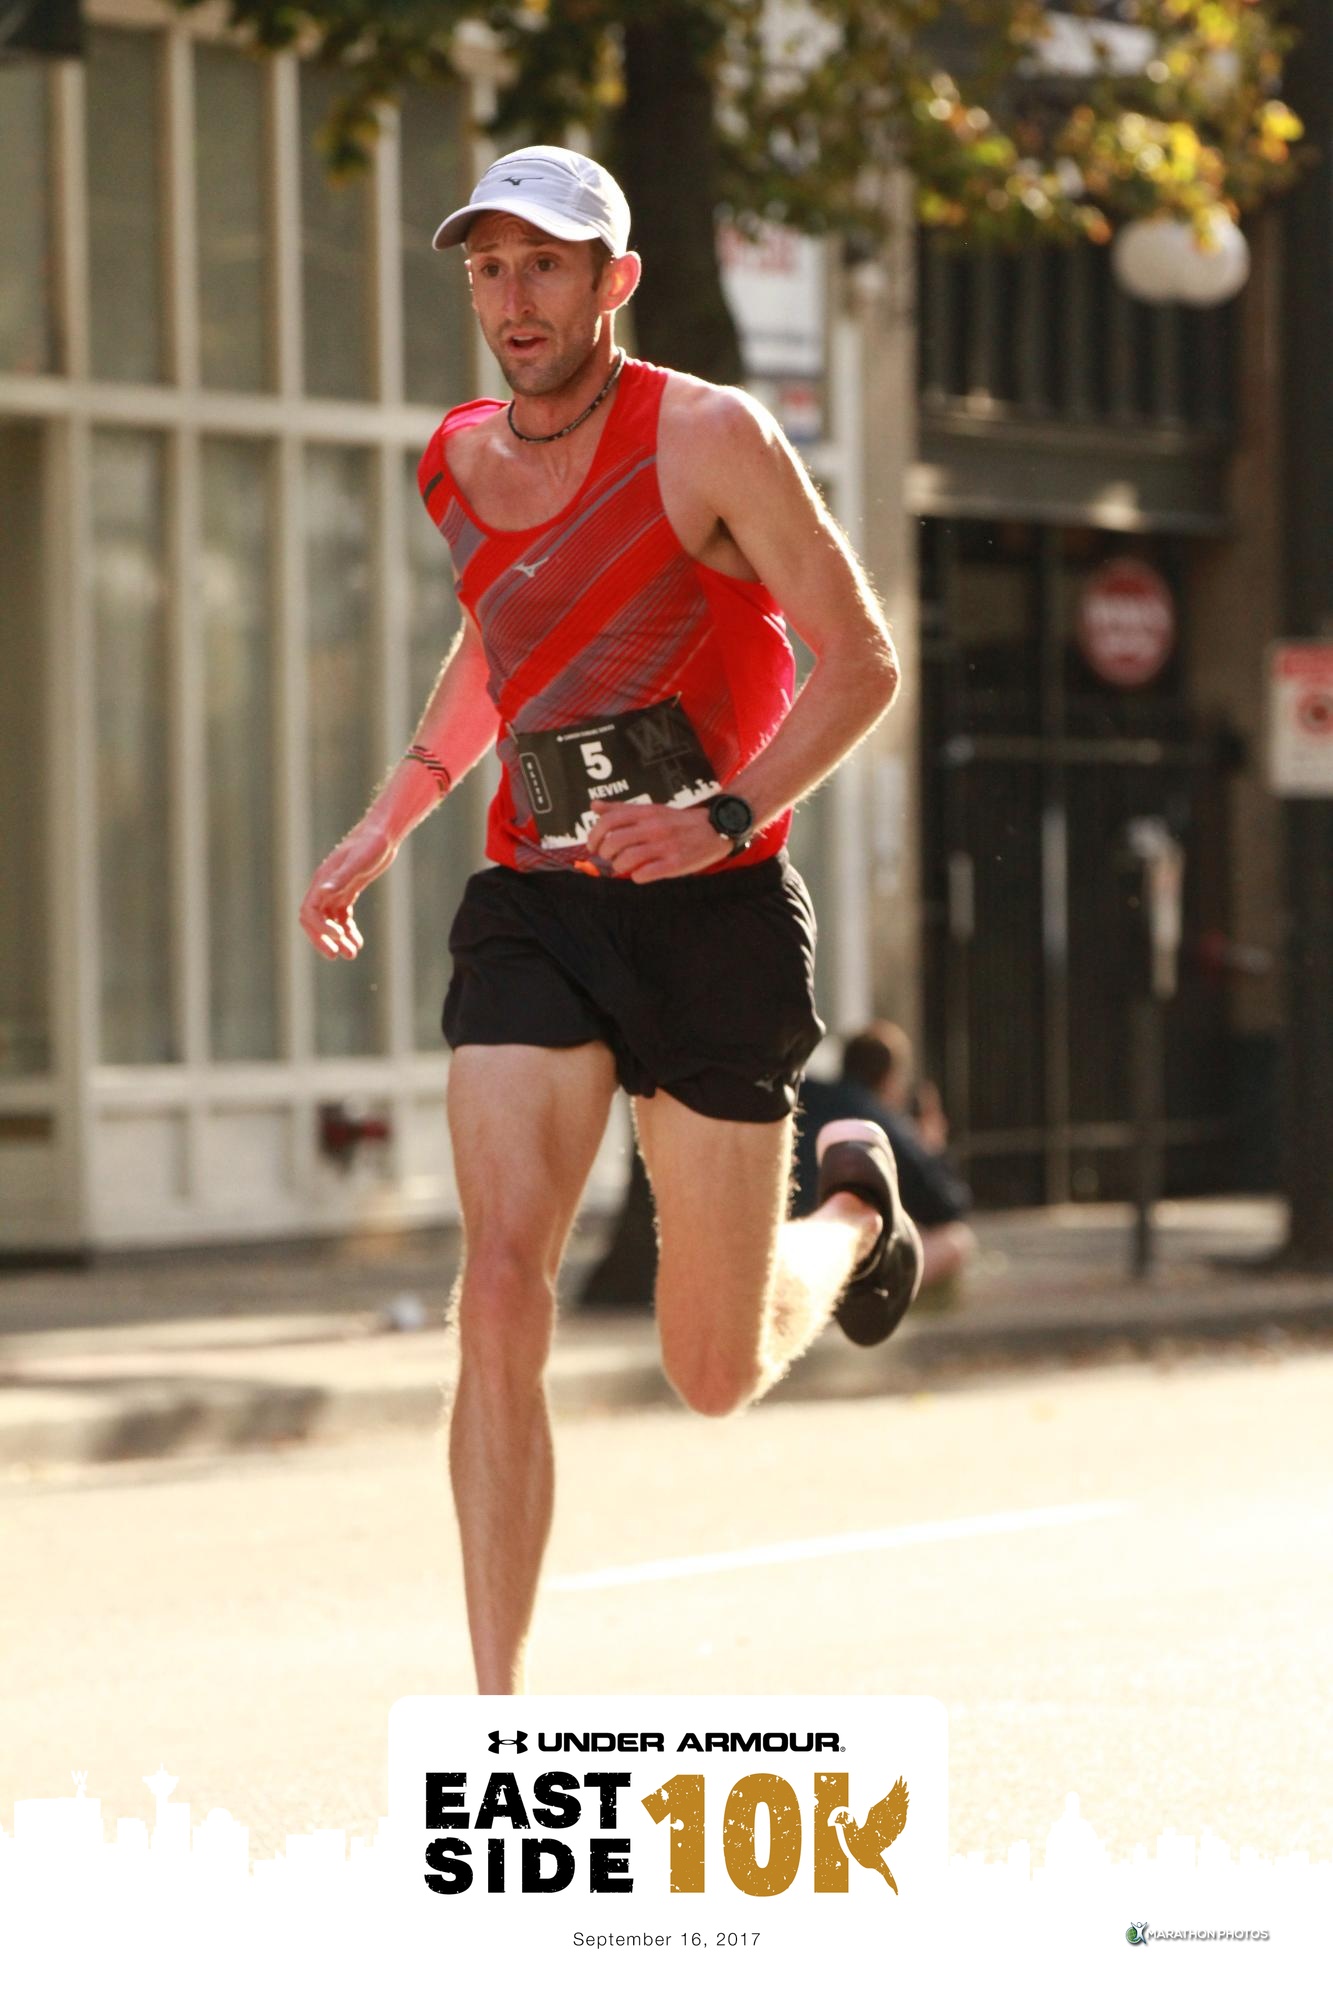 lululemon joins Toronto Waterfront 10K - Canada Running Series